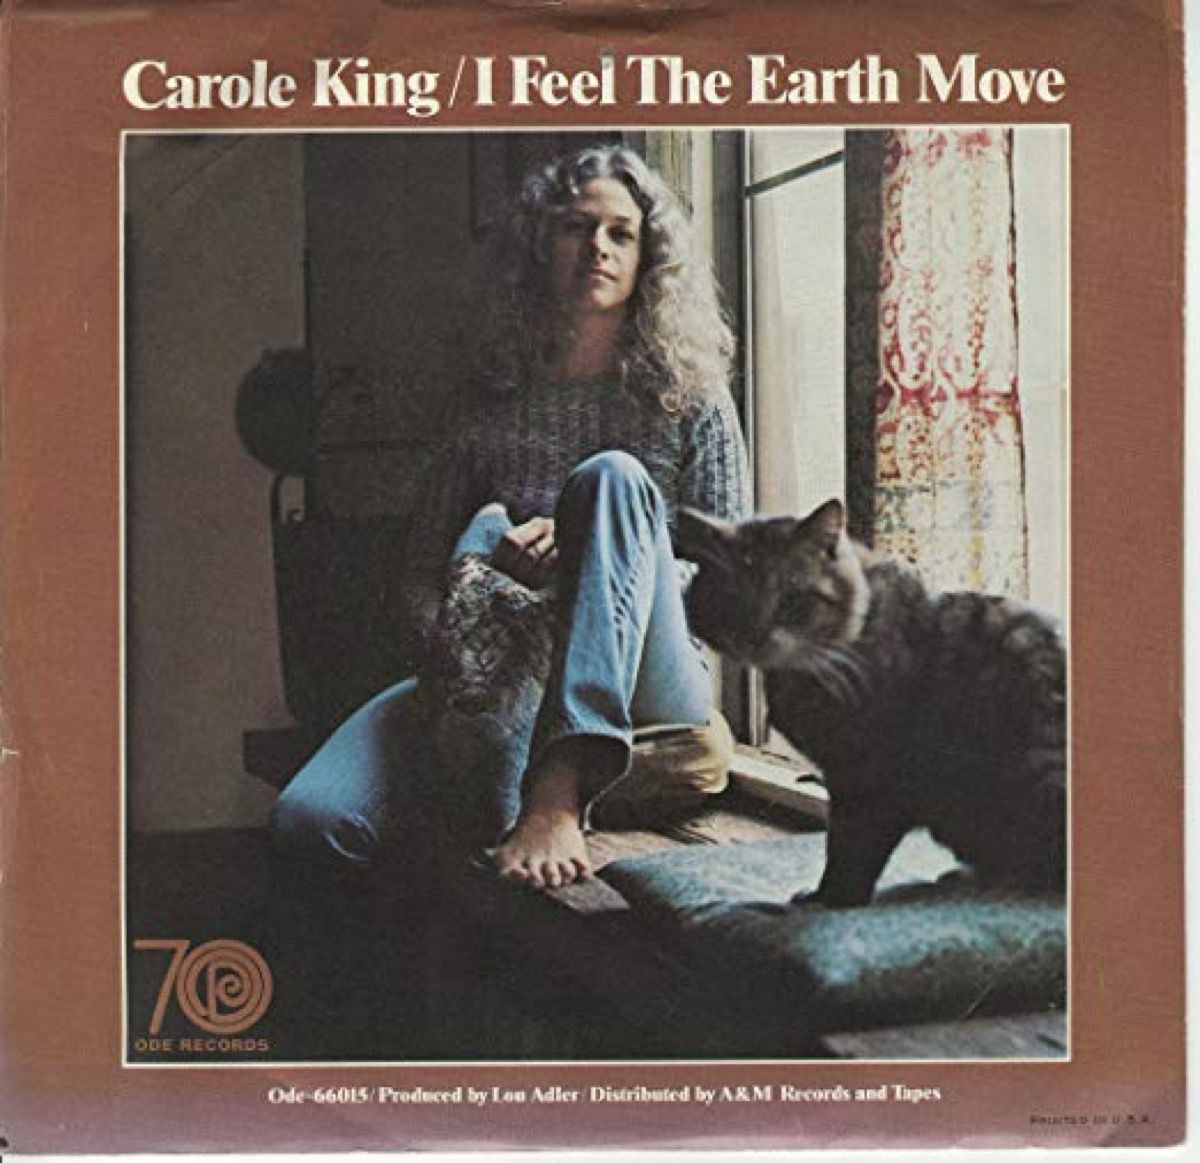 naslovnica albuma za Carole King, I feel the Earth move, pesem poletja 1971